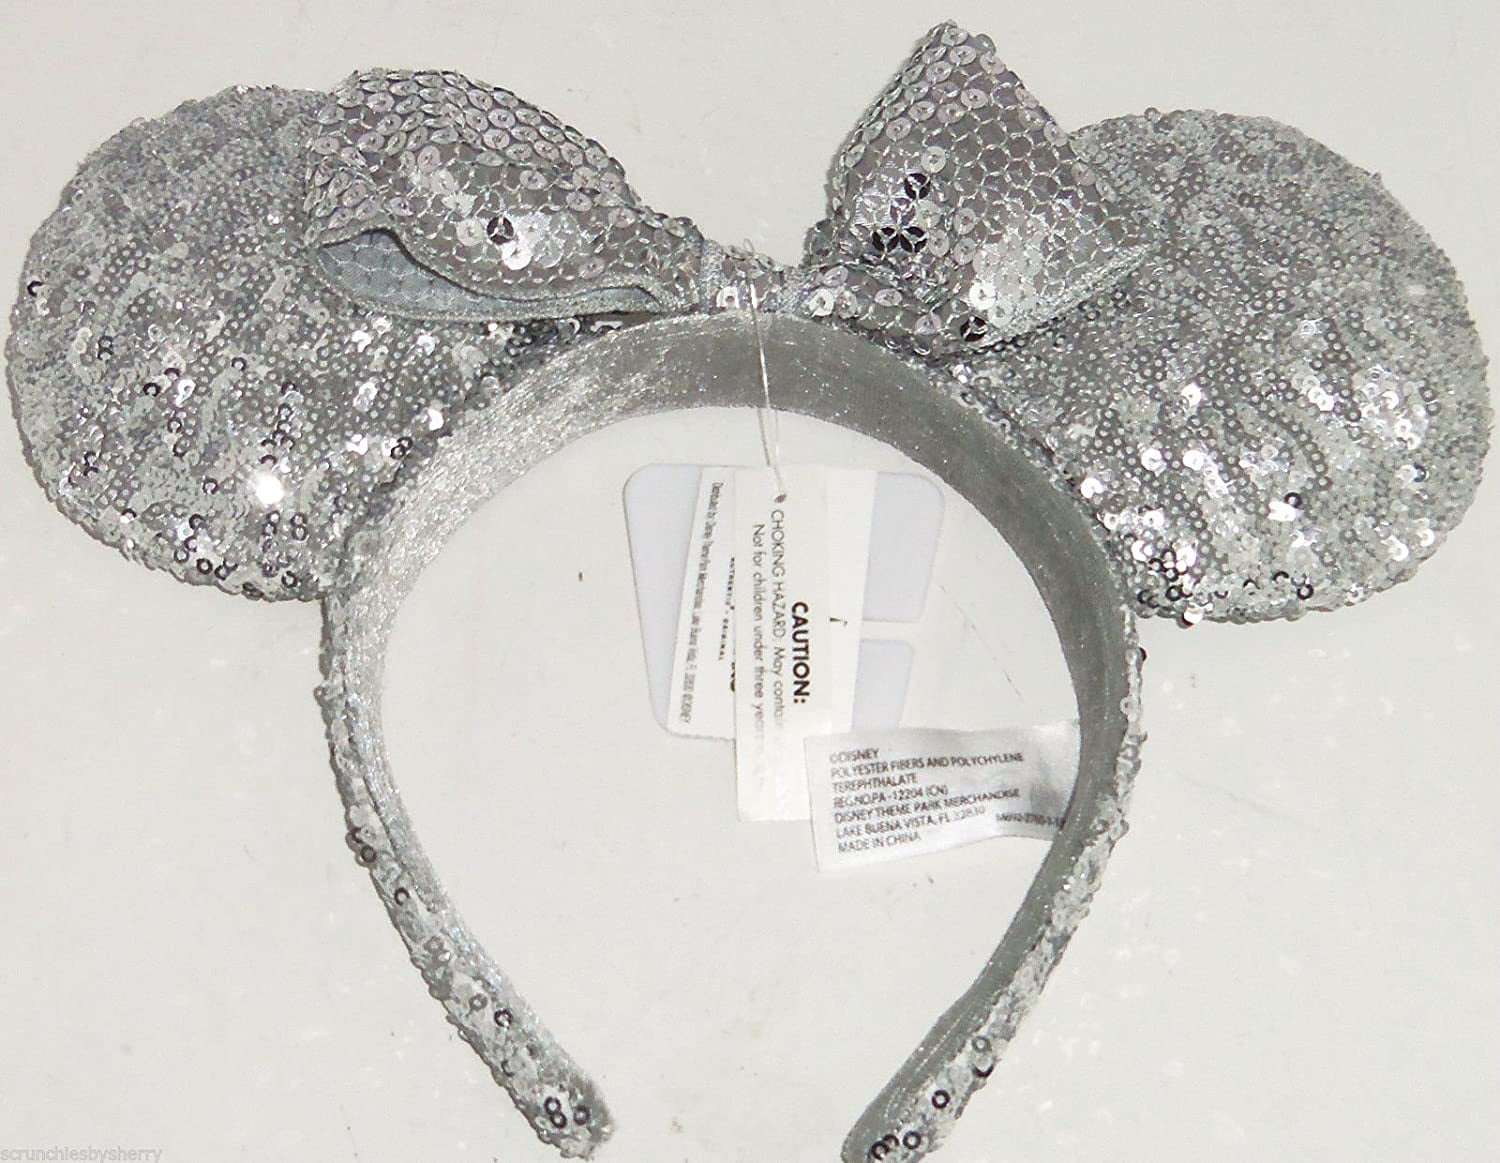 Disney Arendelle Aqua Ears Die-Cut Sticker